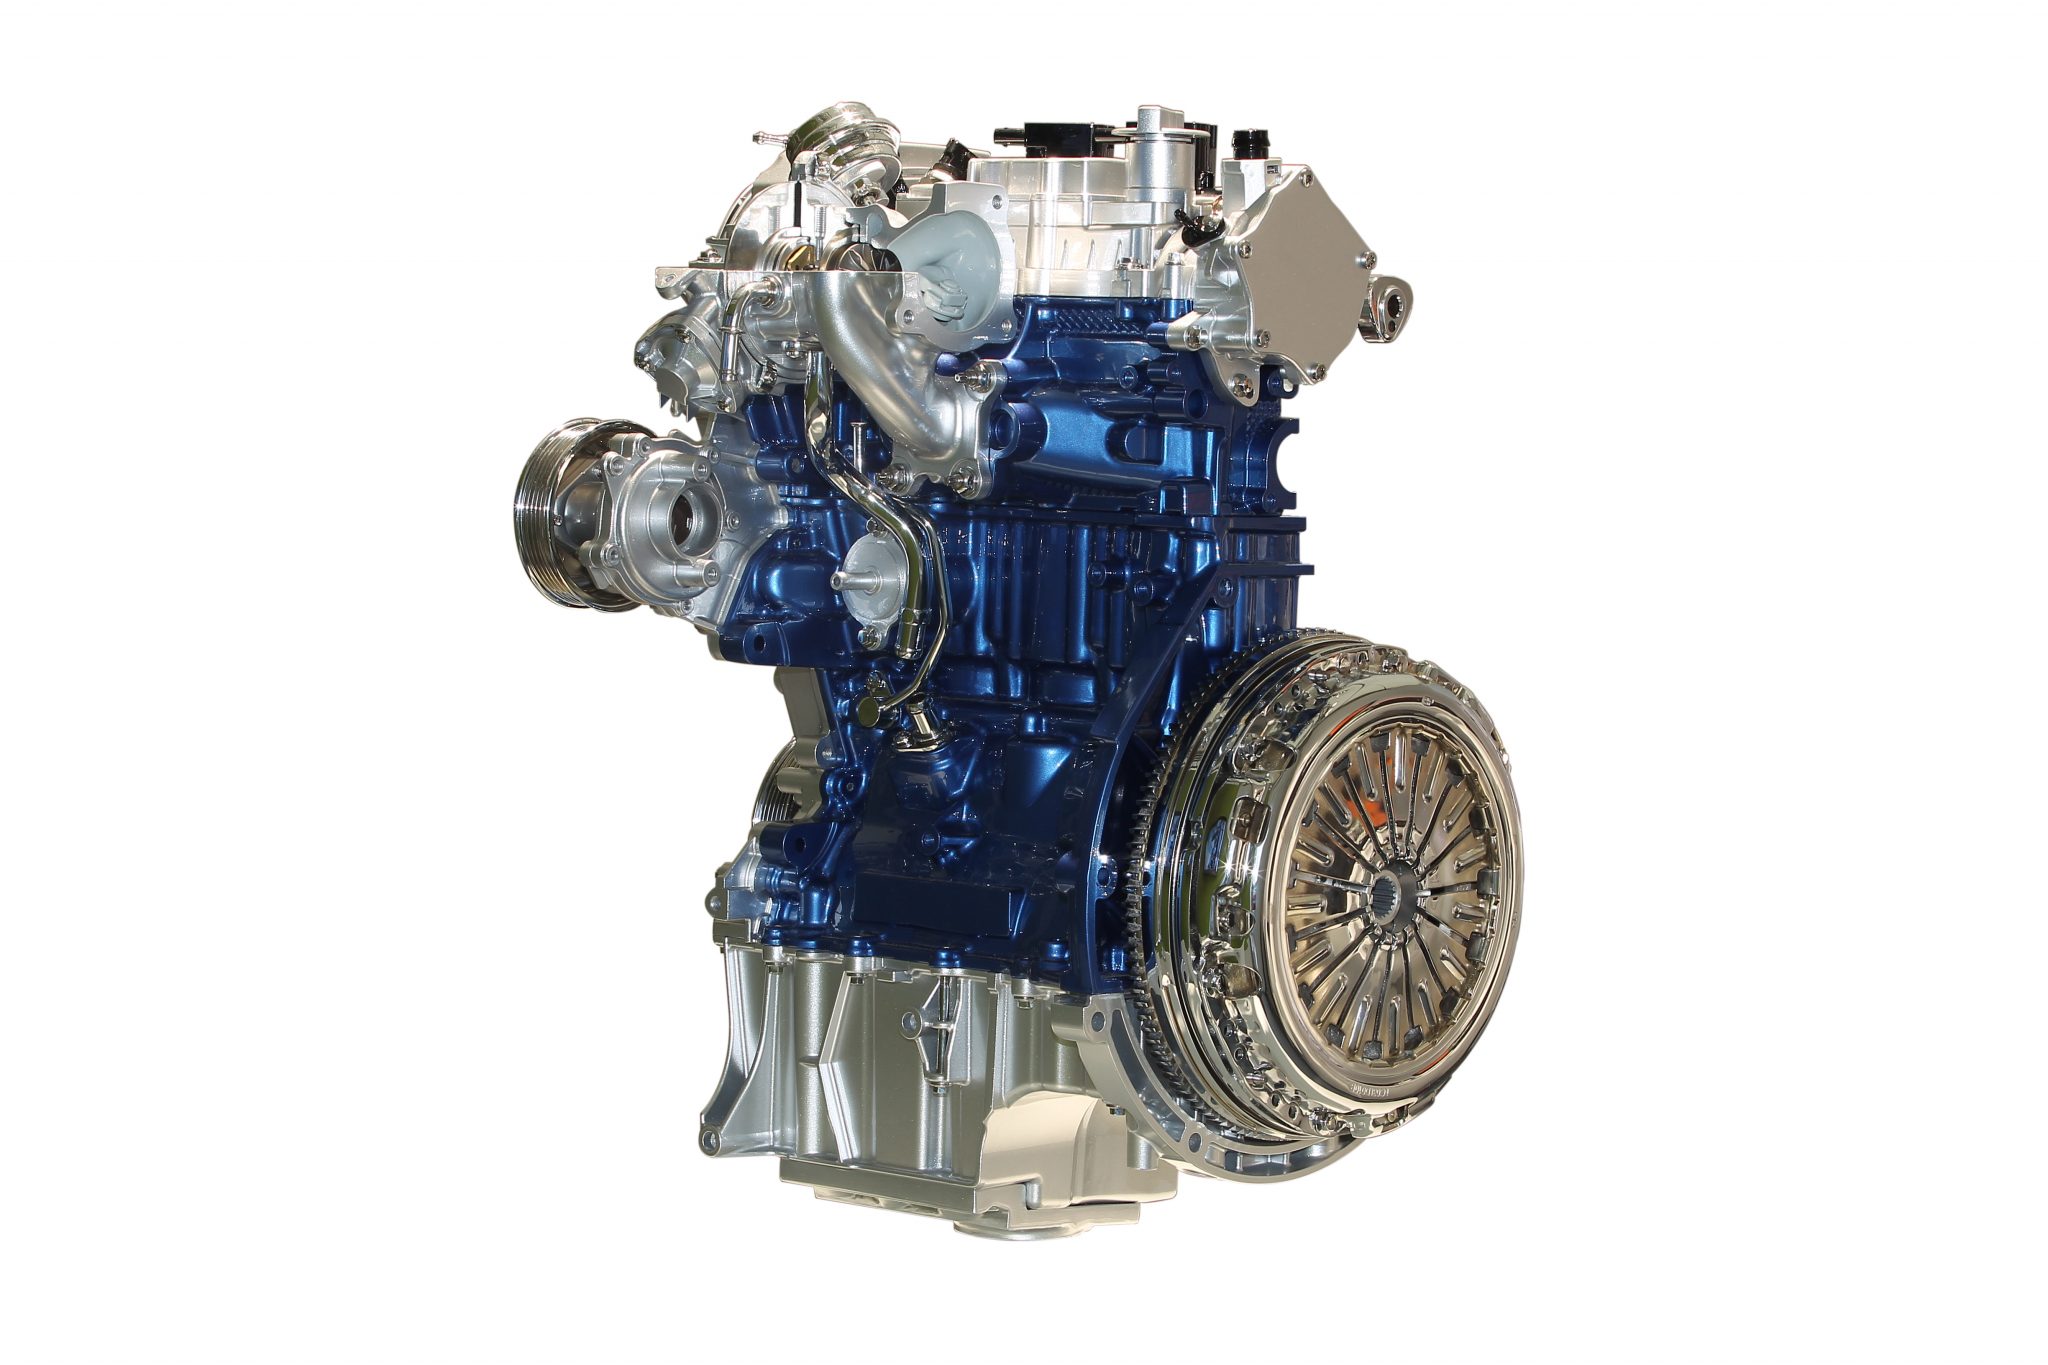 2014 International Engine of the Year